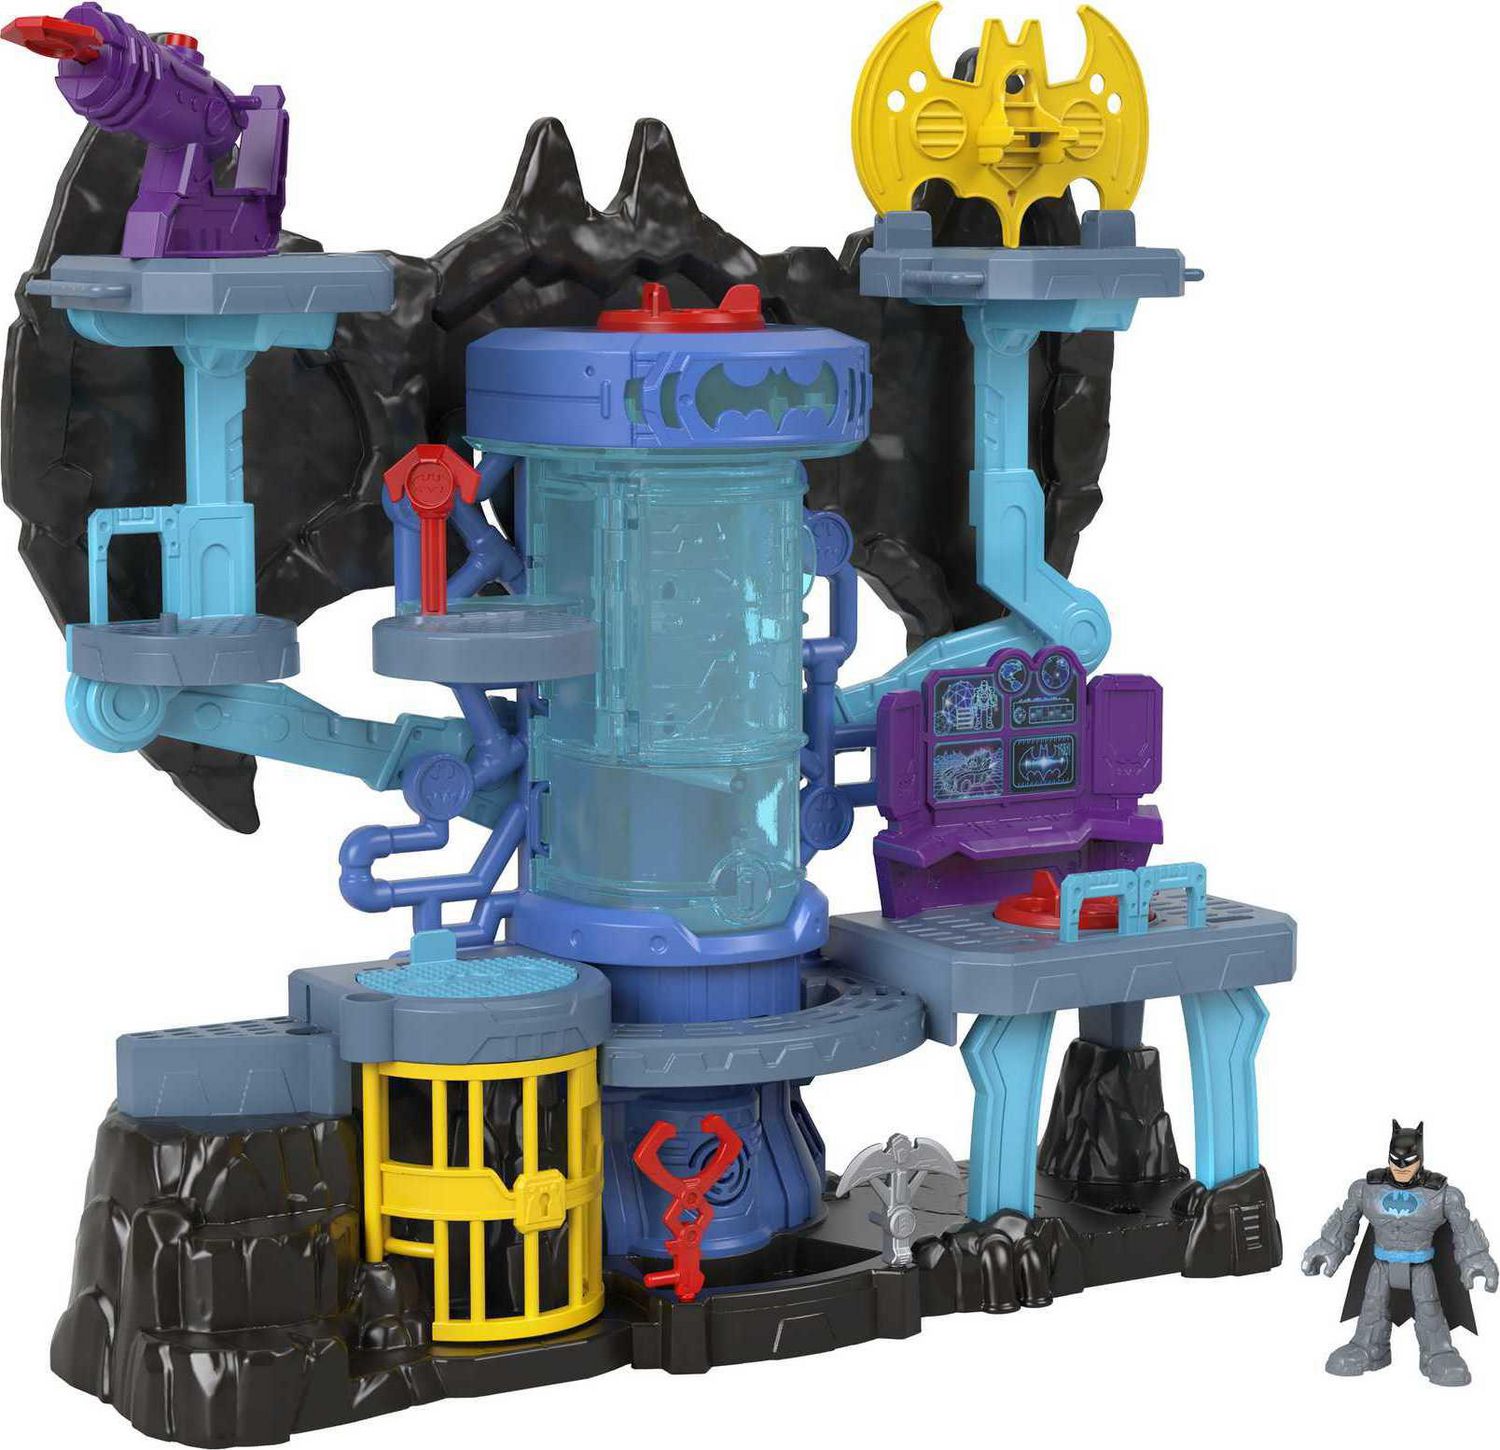 Imaginext DC Super Friends Batman Figure and Bat-Tech Batcave